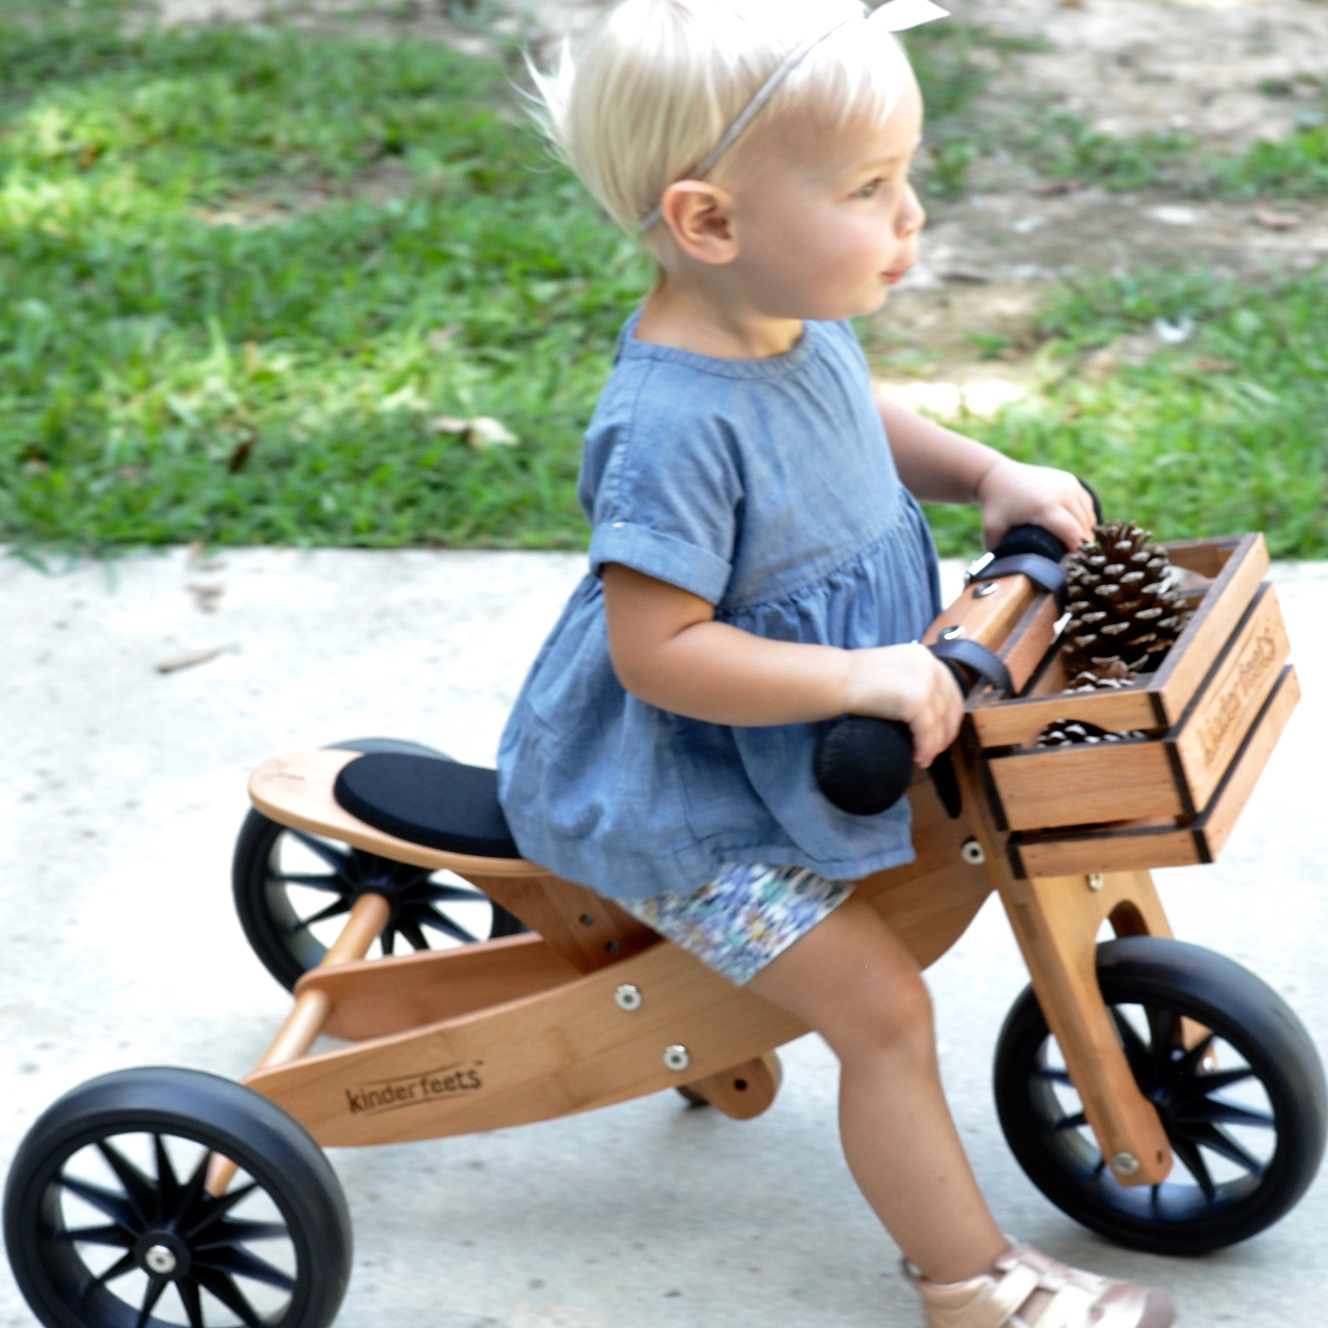 Tricicleta de echilibru 2 in 1 - Tiny Tot Bamboo - Kinderfeets